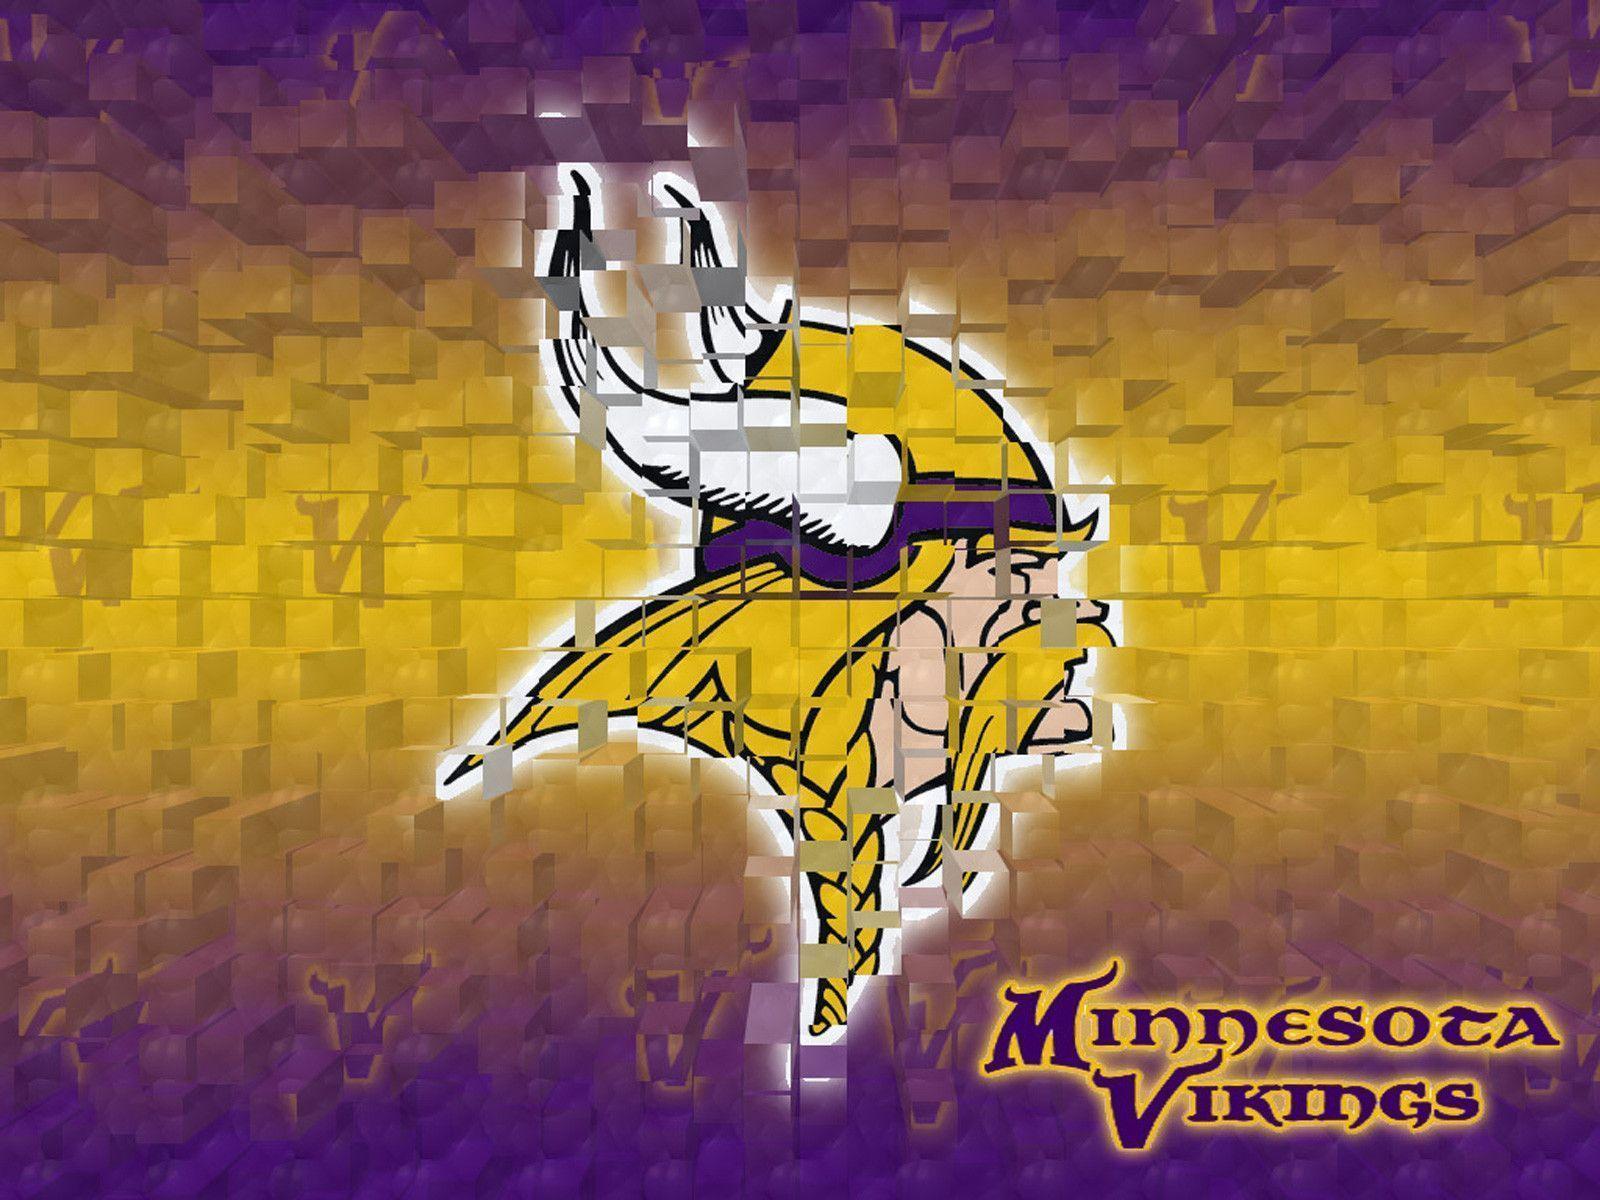 Cool Minnesota Vikings Wallpaper